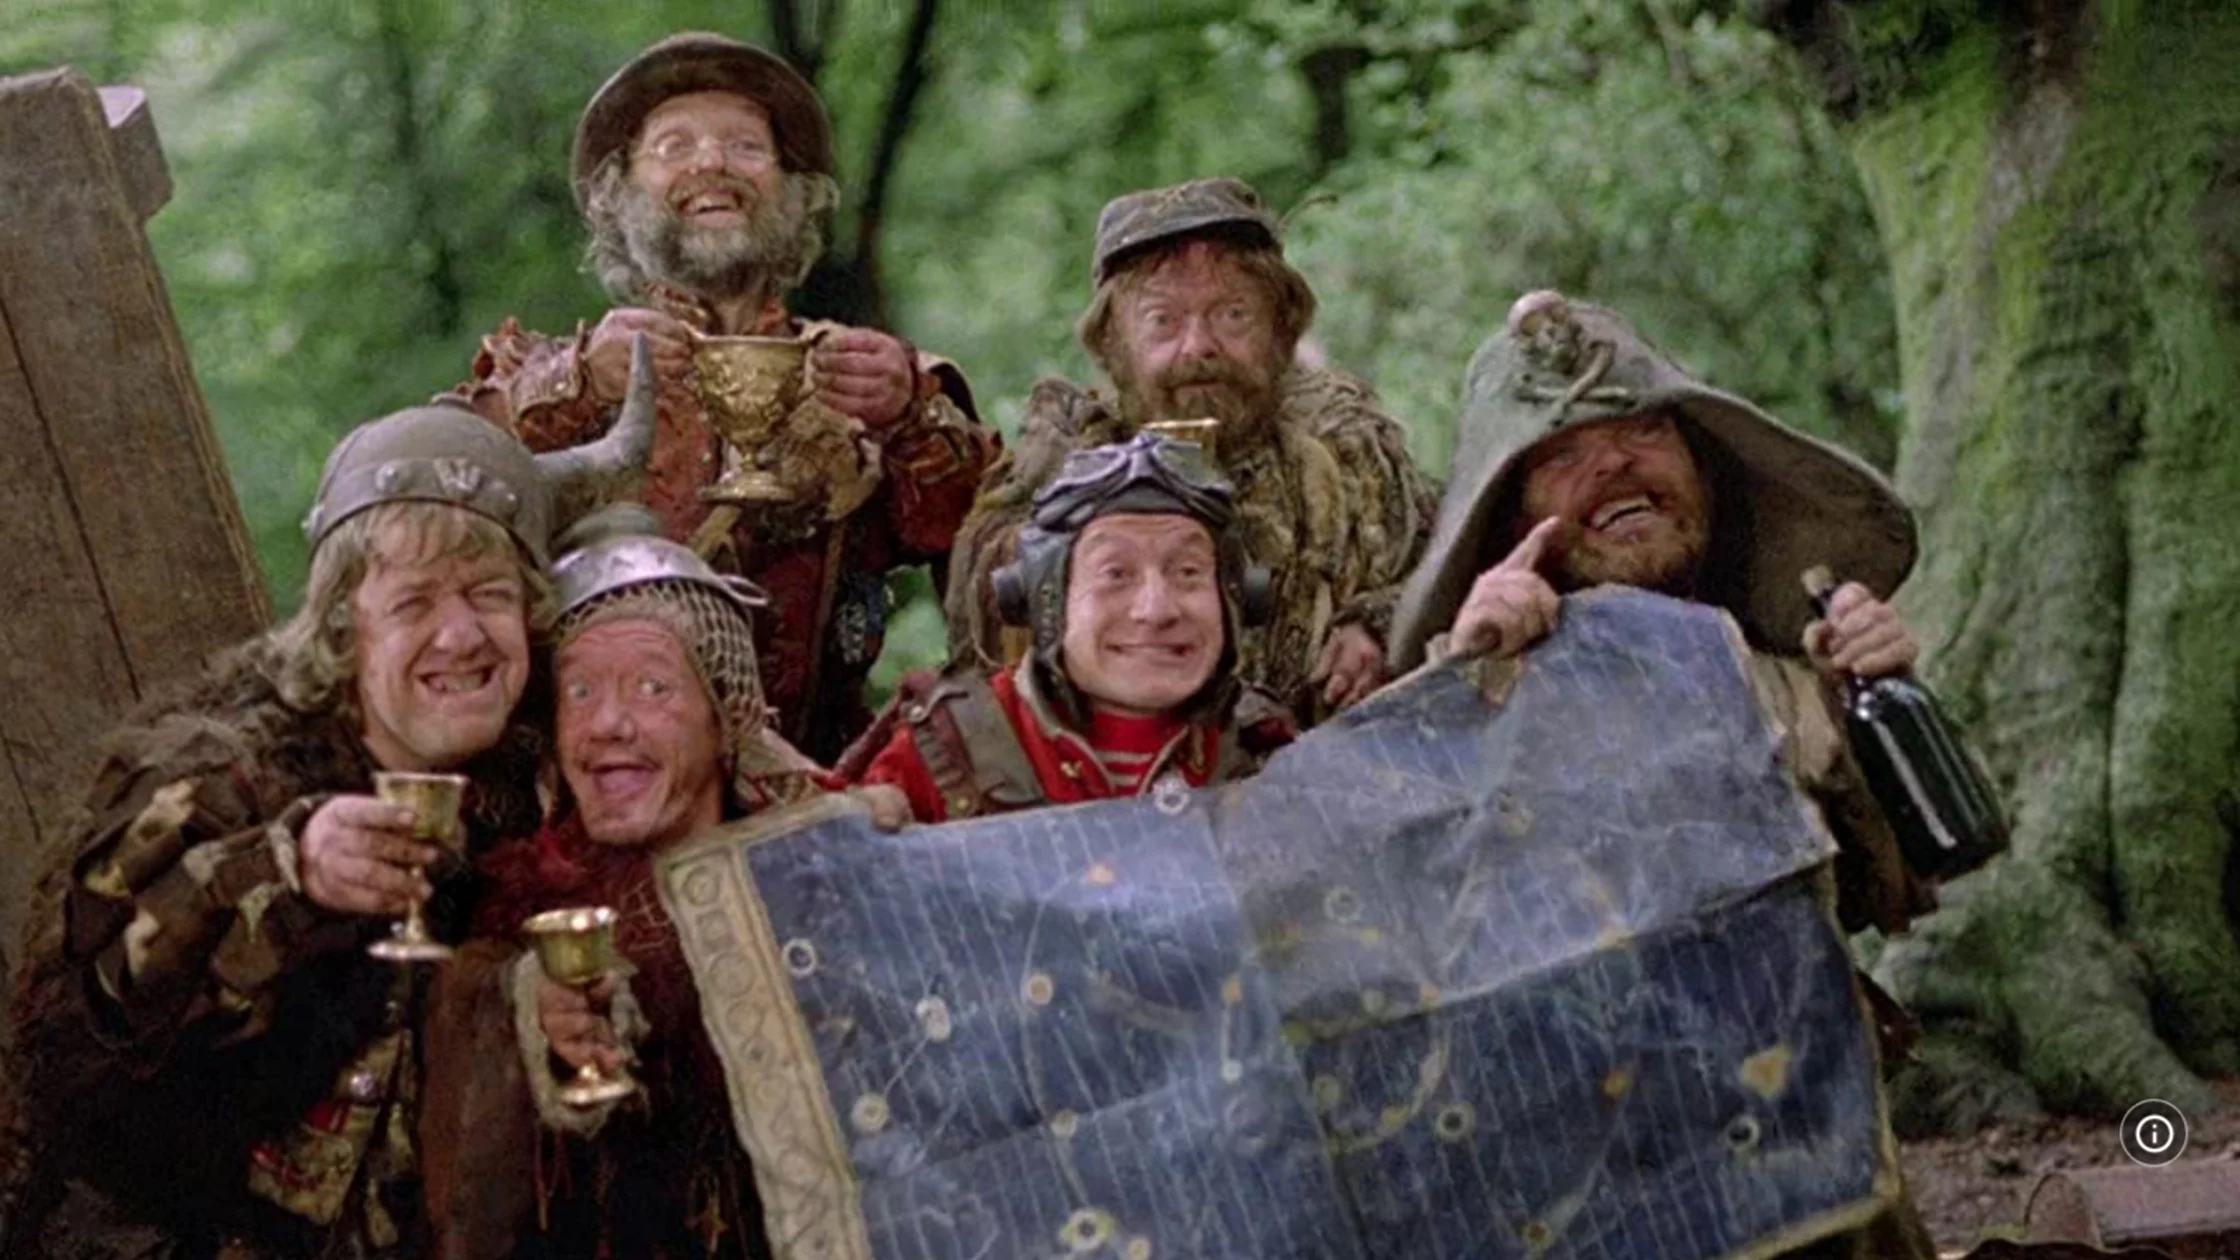 Six dwarfs holding a map. 